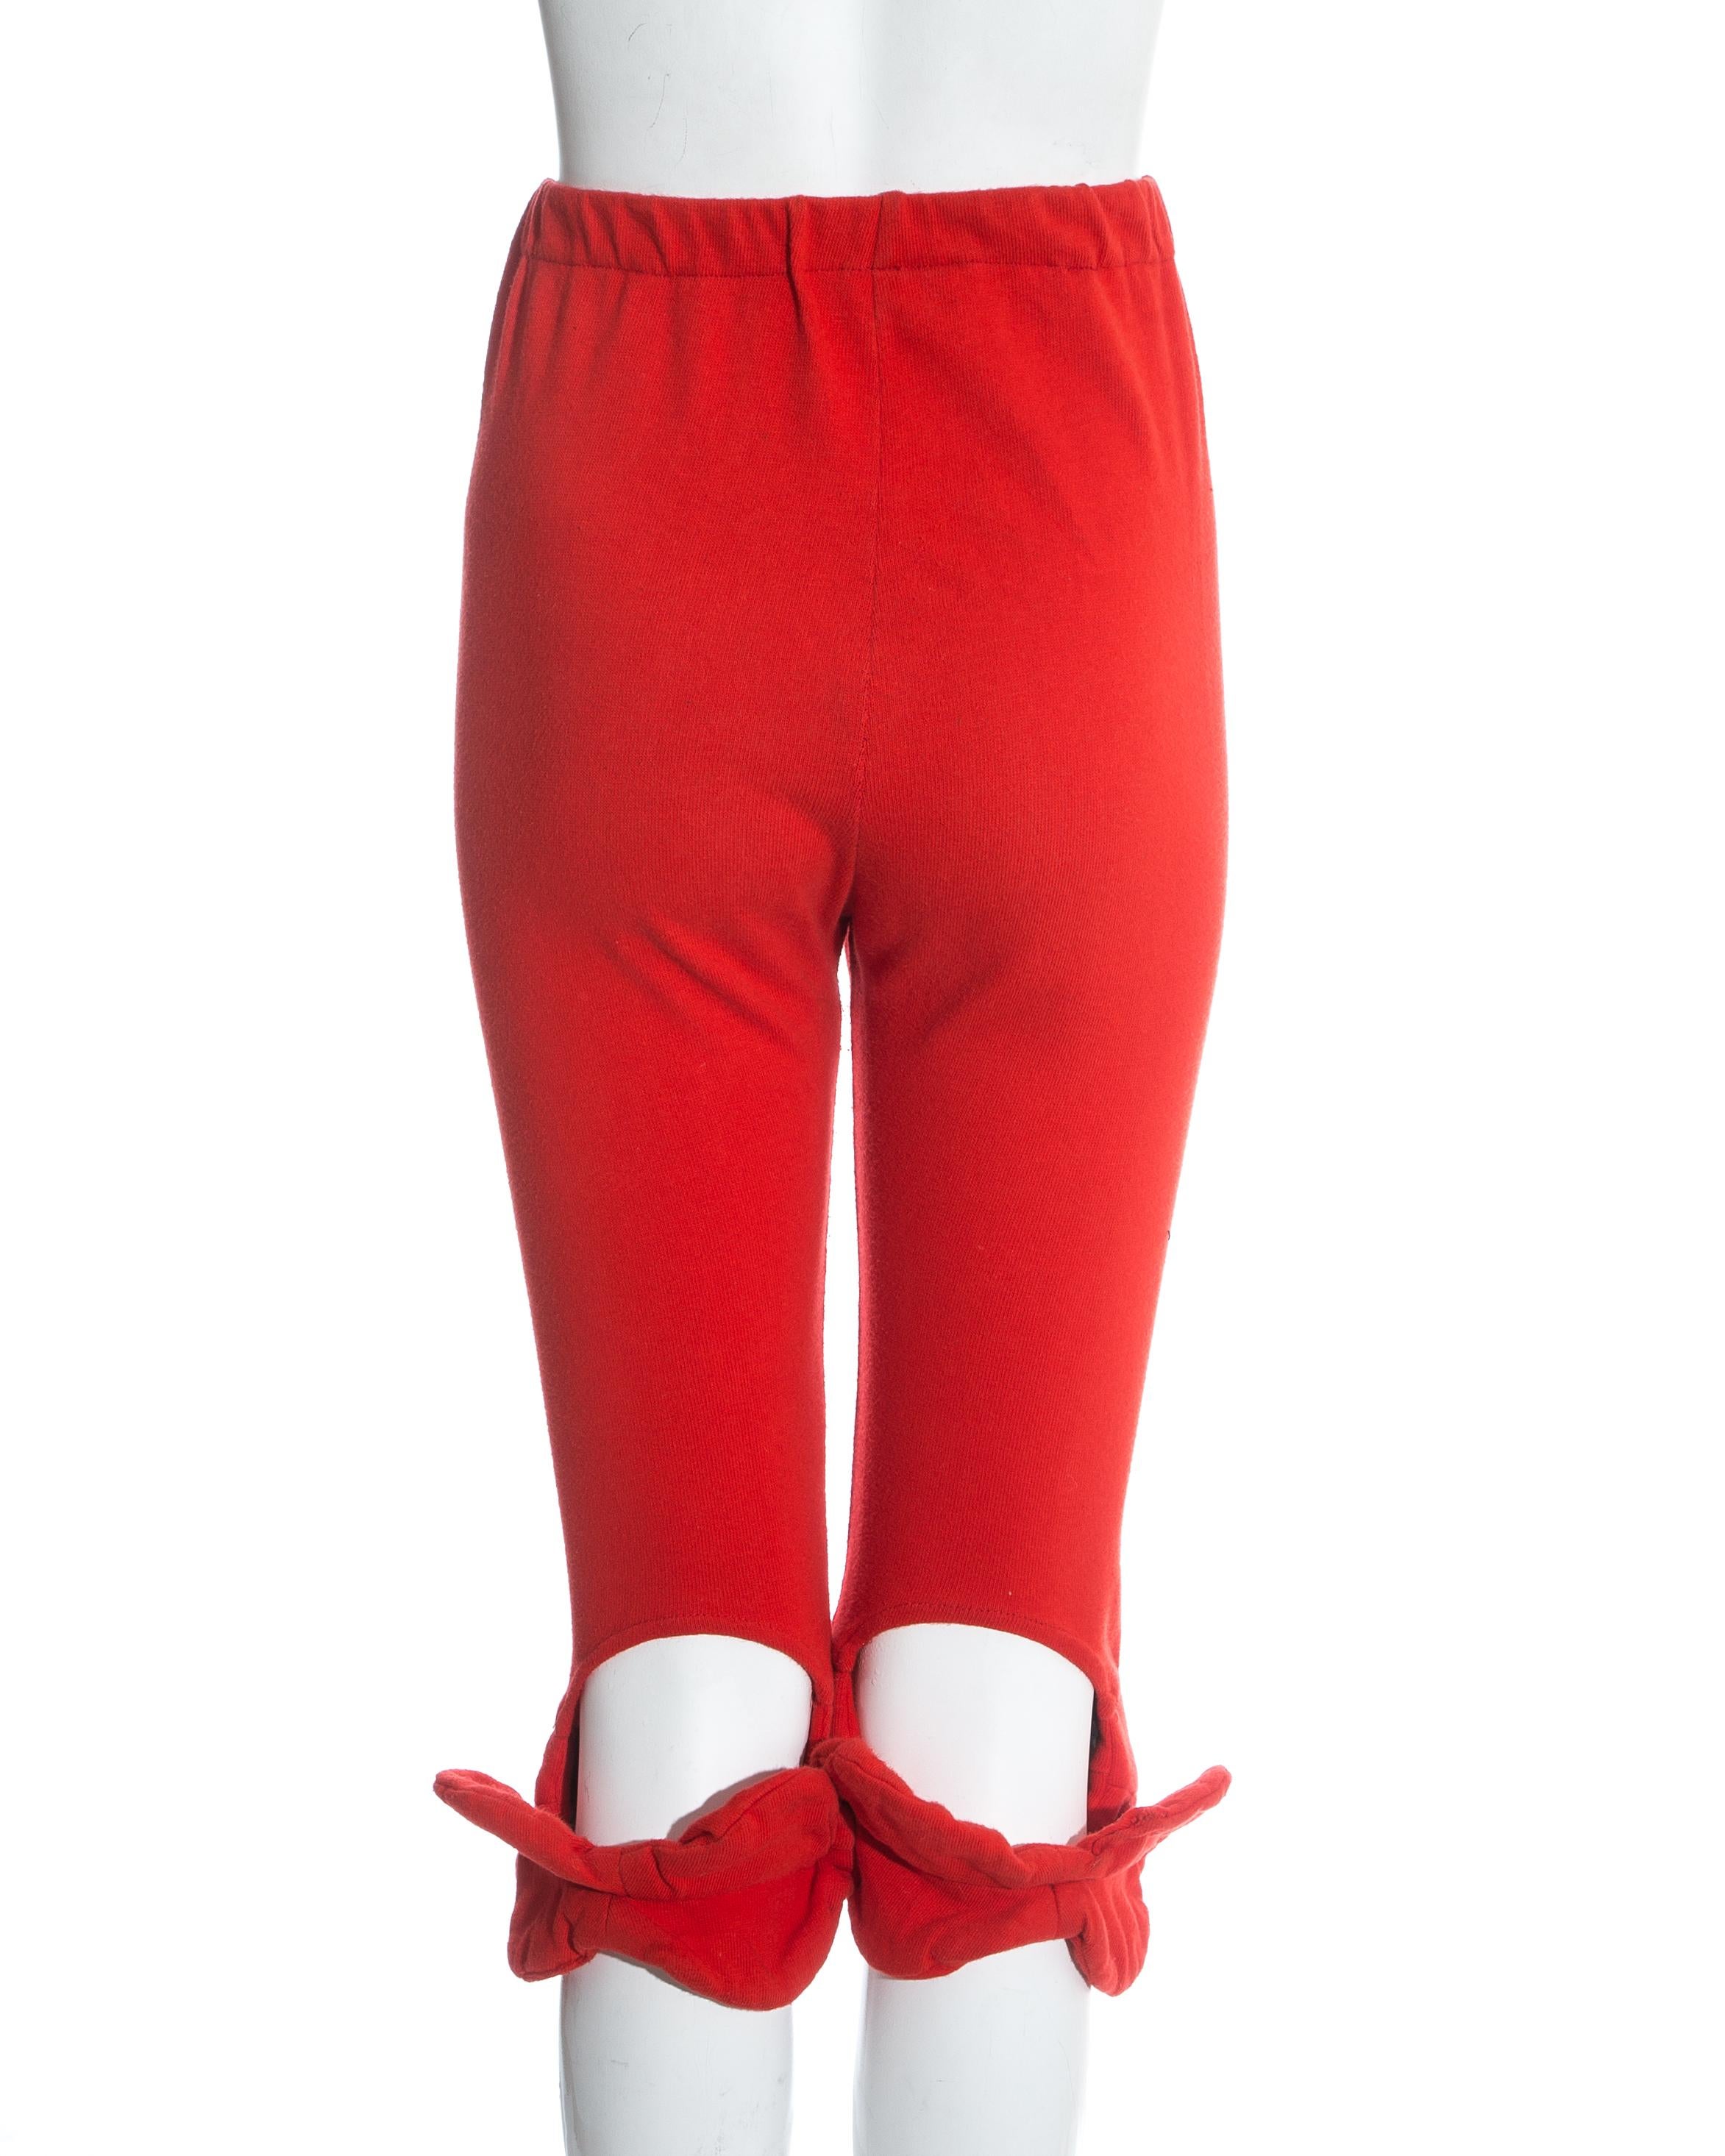 red stirrup pants